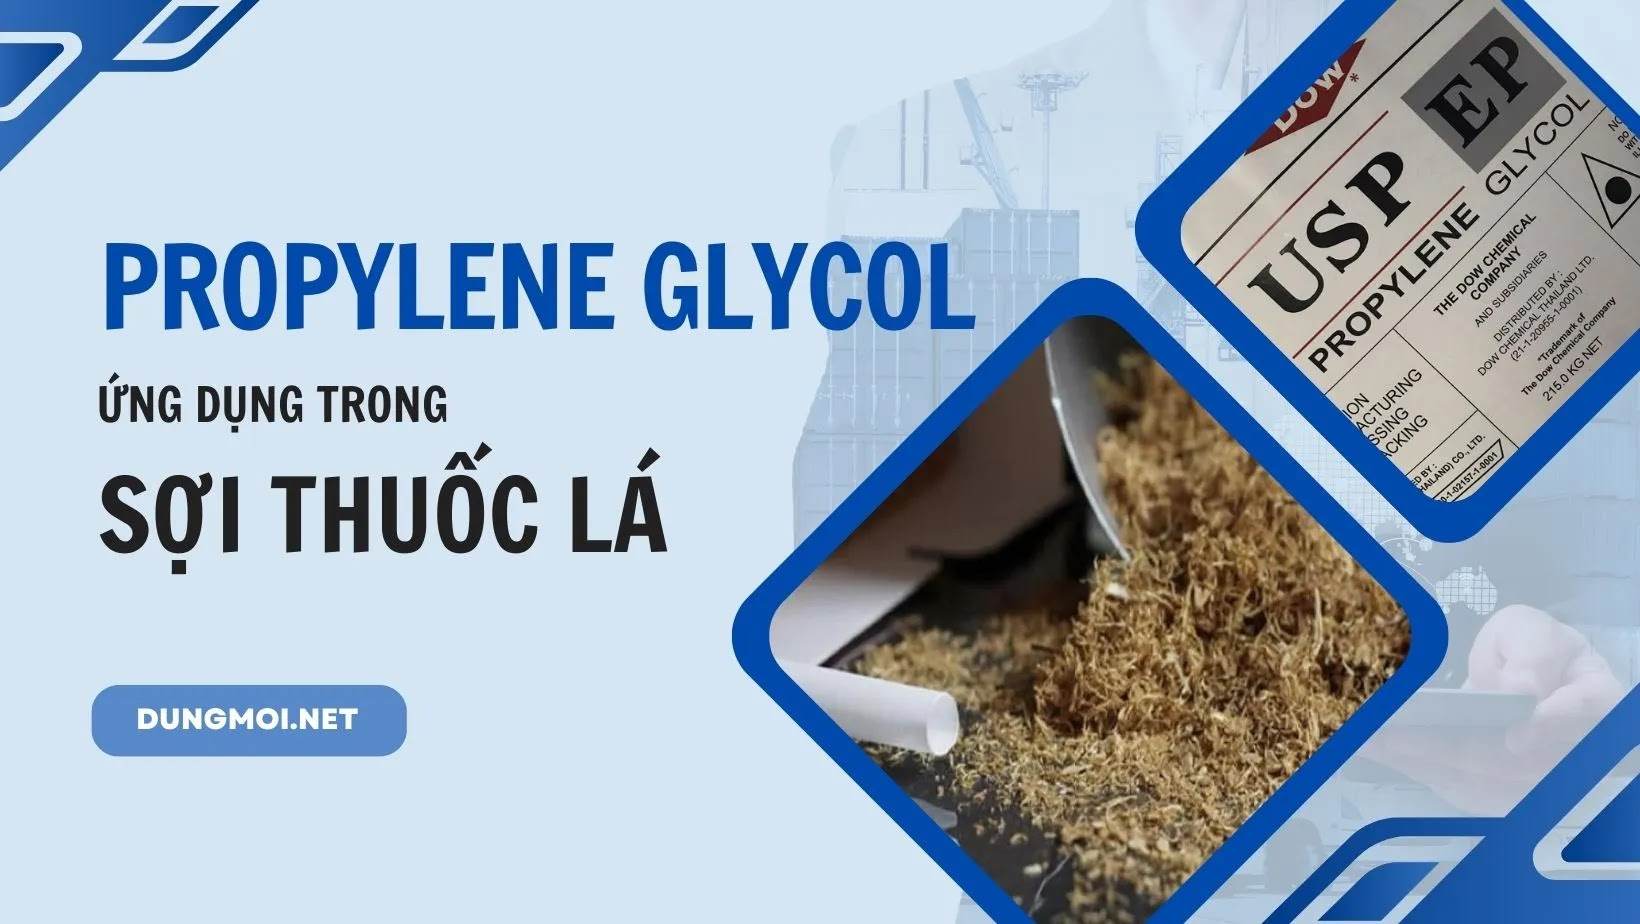 Propylene glycol ứng dụng trong sợi thuốc lá.